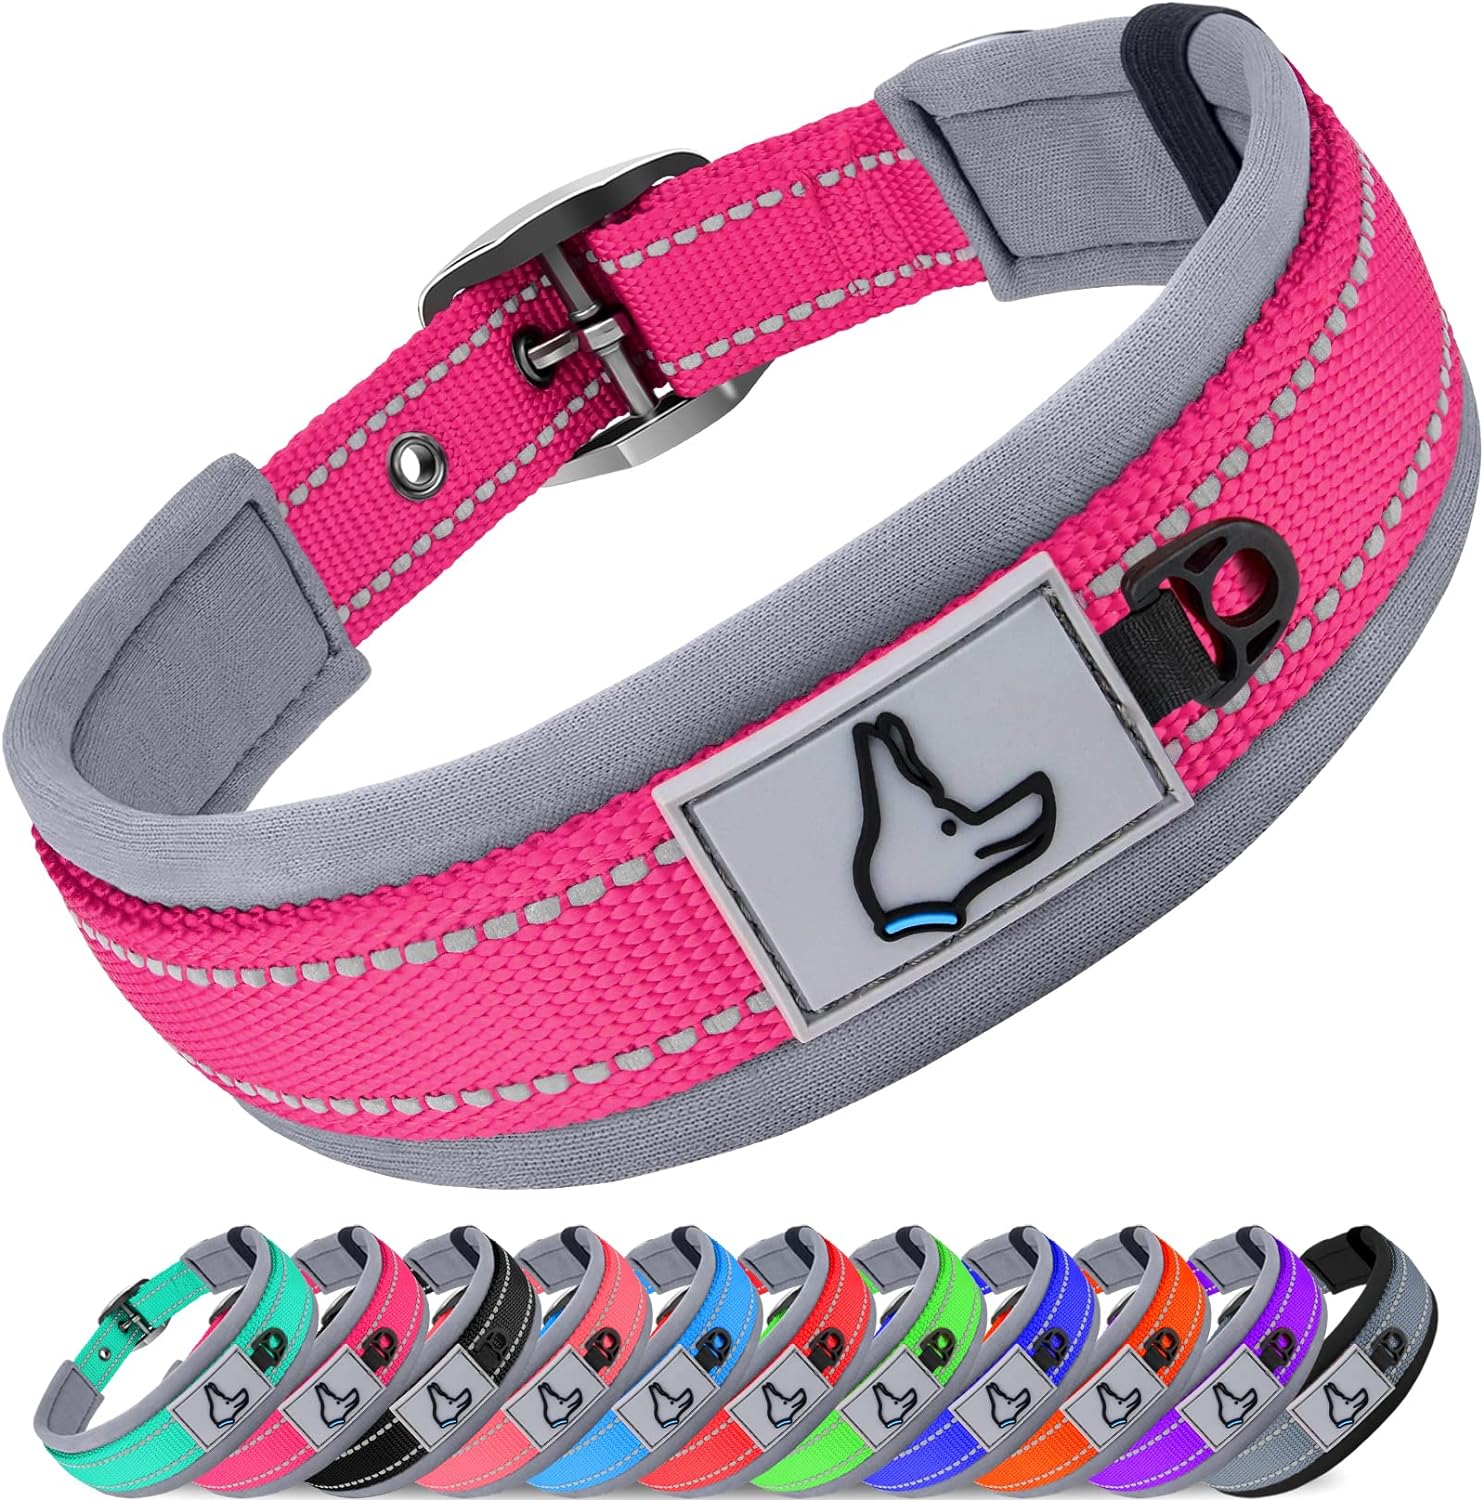 Joytale Neoprene Padded Dog Collars for Medium Dogs, 11 Colors, Reflective Wide Pet Collars with Durable Metal Belt Buckle, Adjustable Heavy Duty Nylon Dog Collar, Hotpink